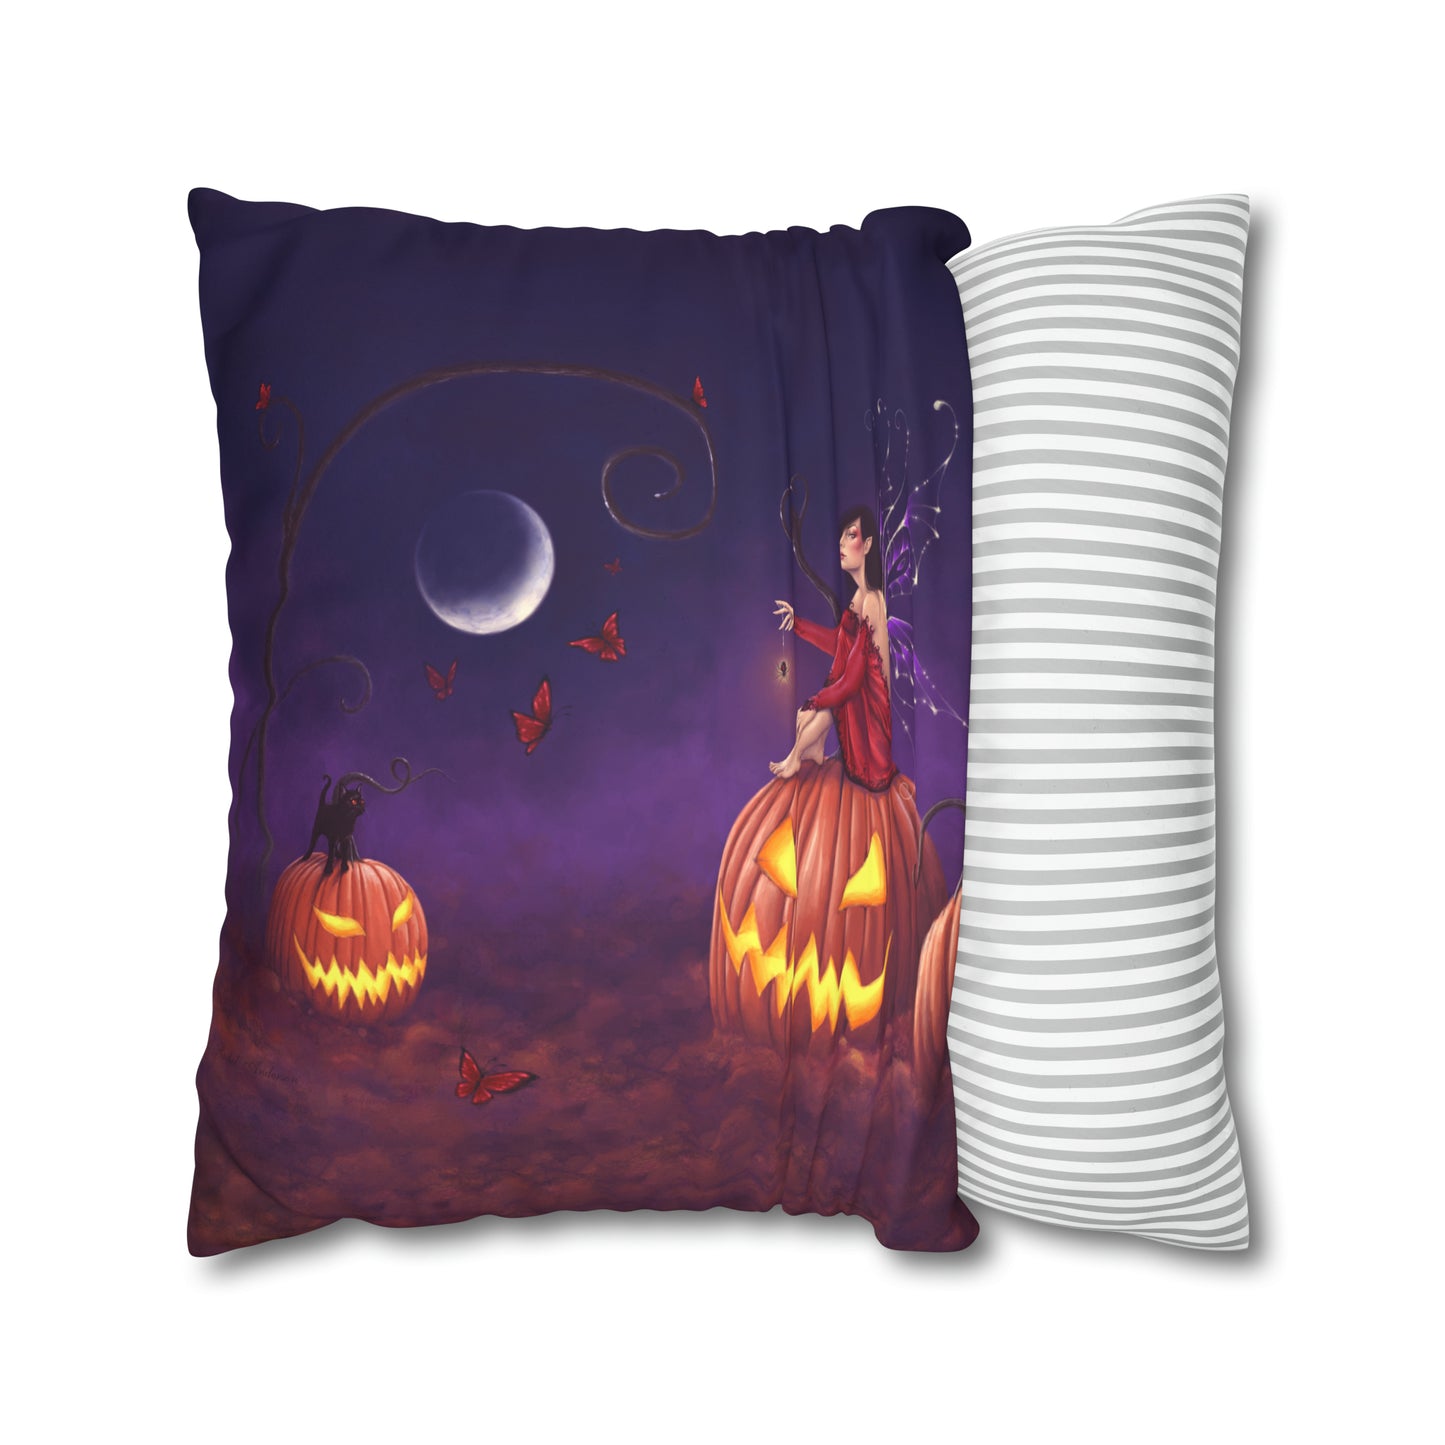 Throw Pillow Cover - Pumpkin Pixie